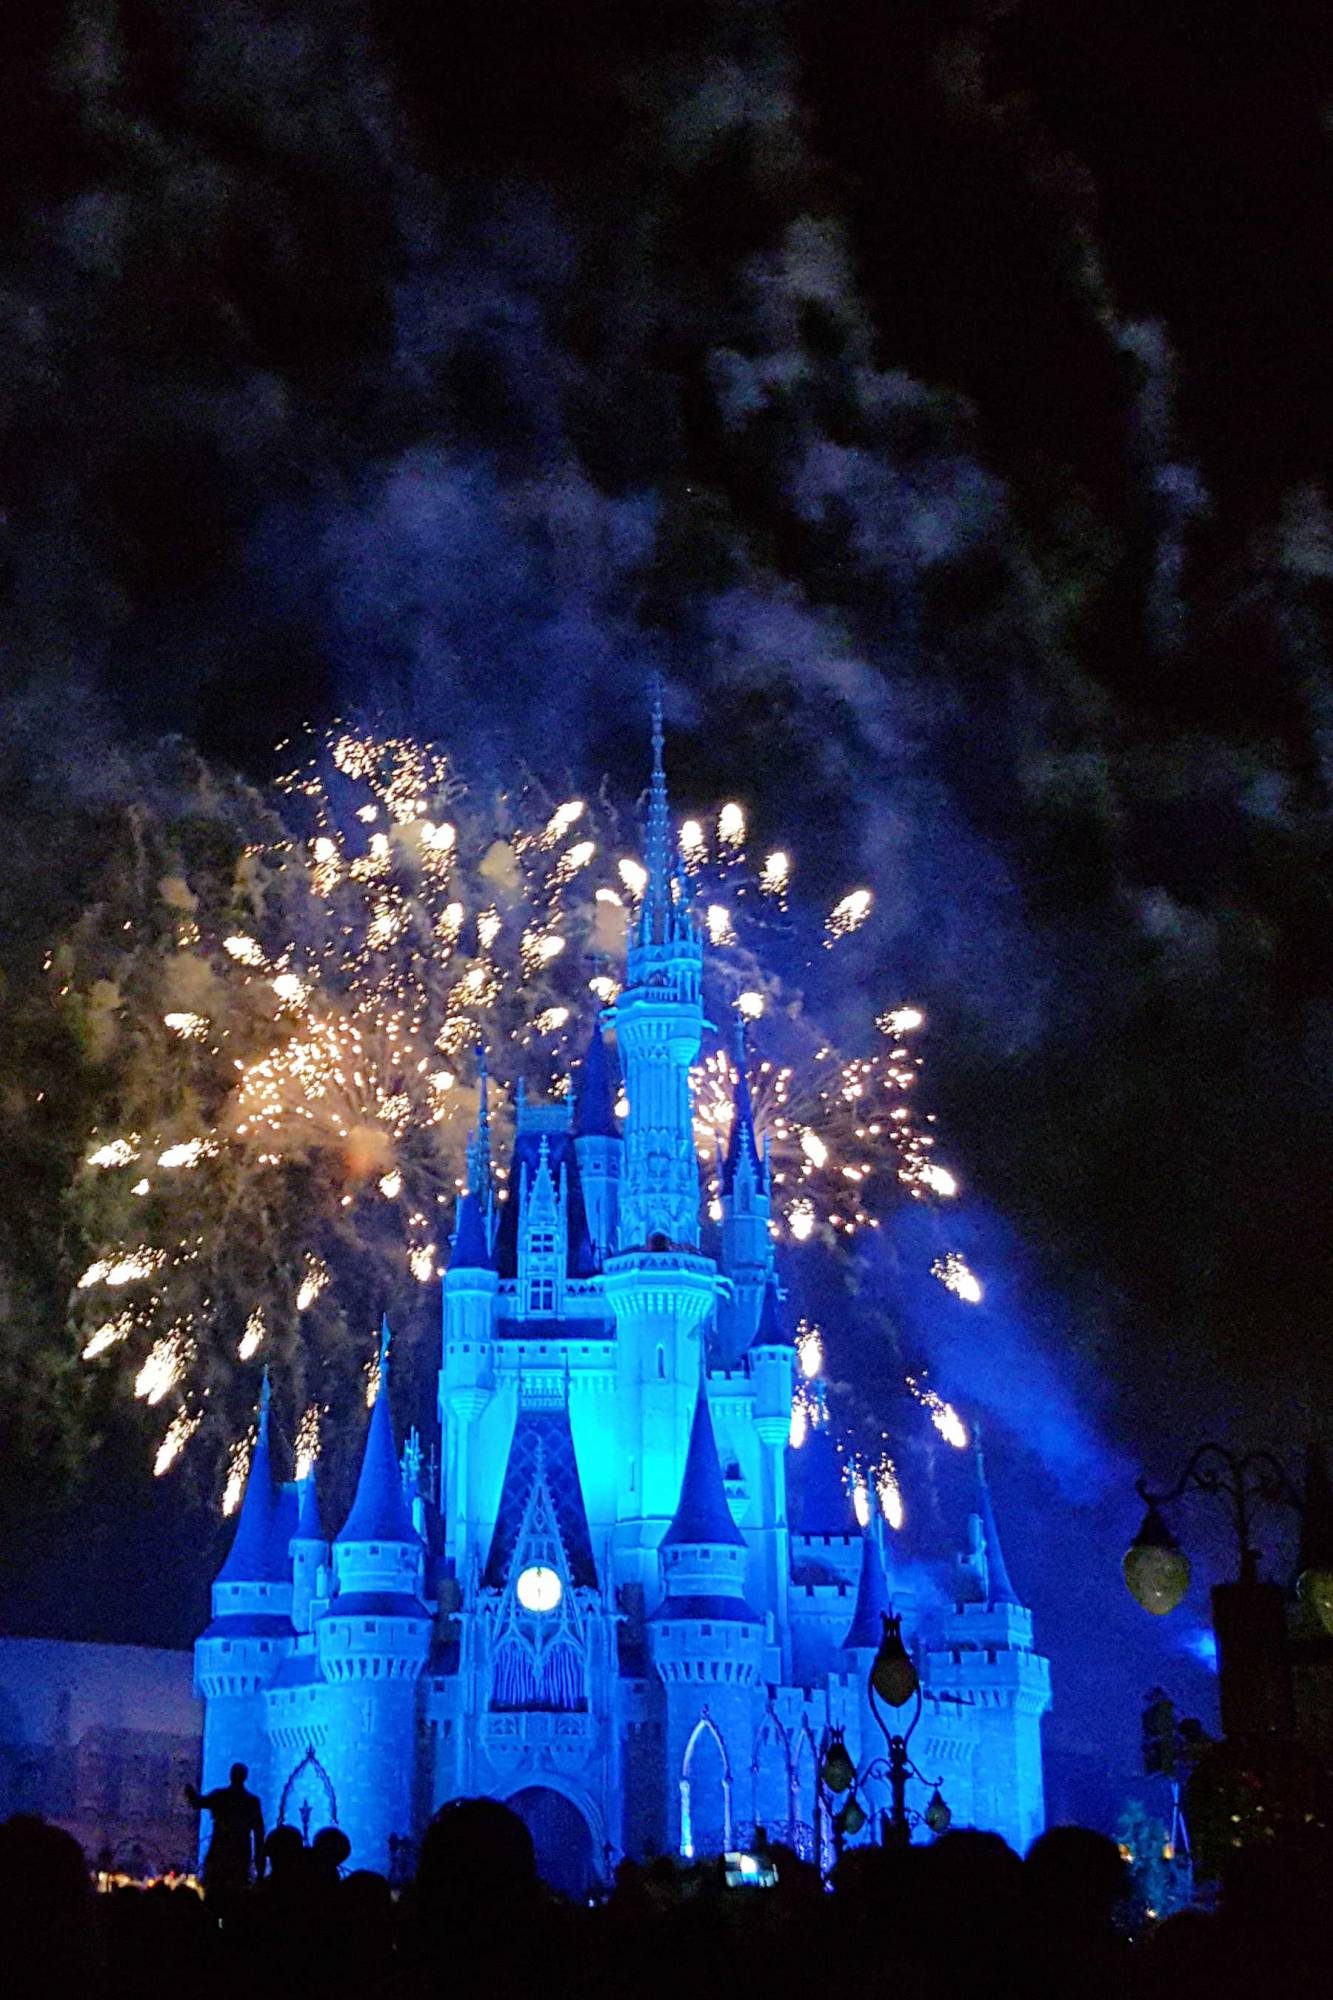 Walt Disney World Magic Kingdom Wishes Fireworks over the Castle